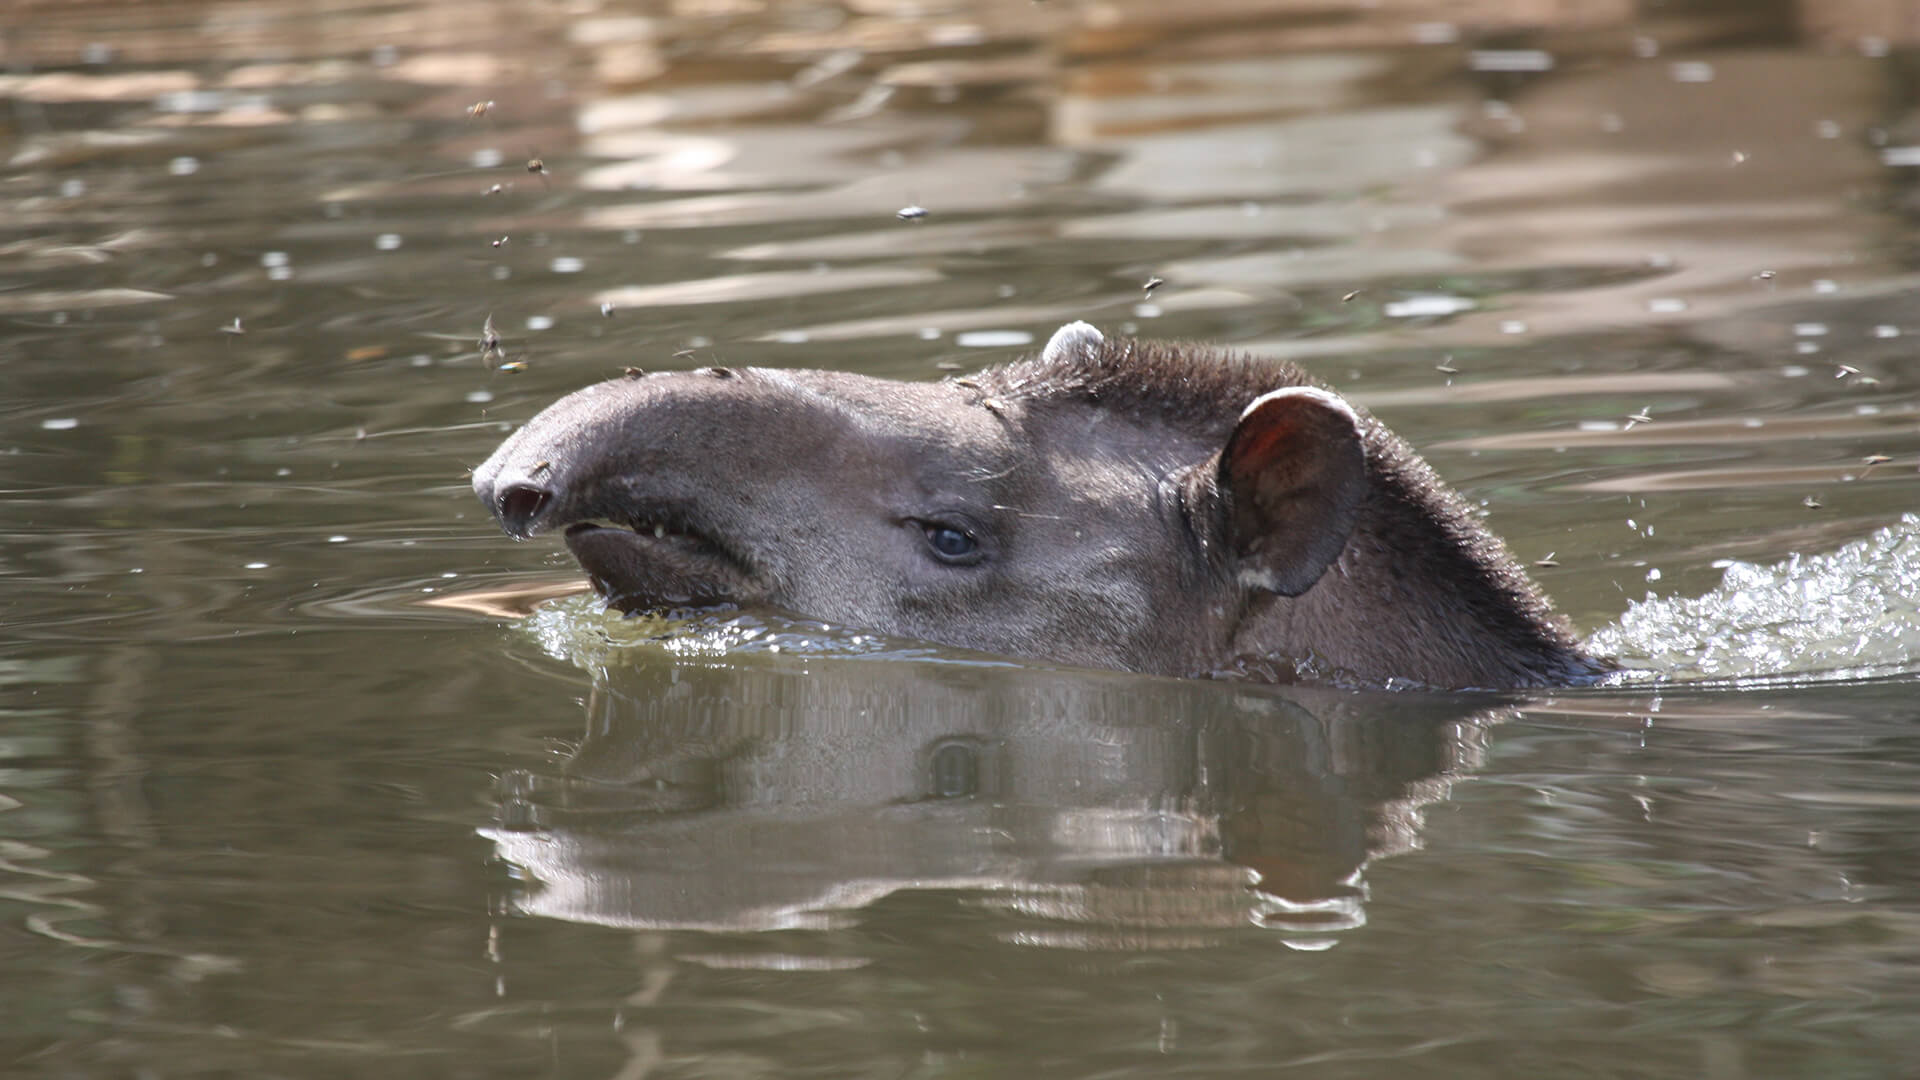 Tapir swimming in the river